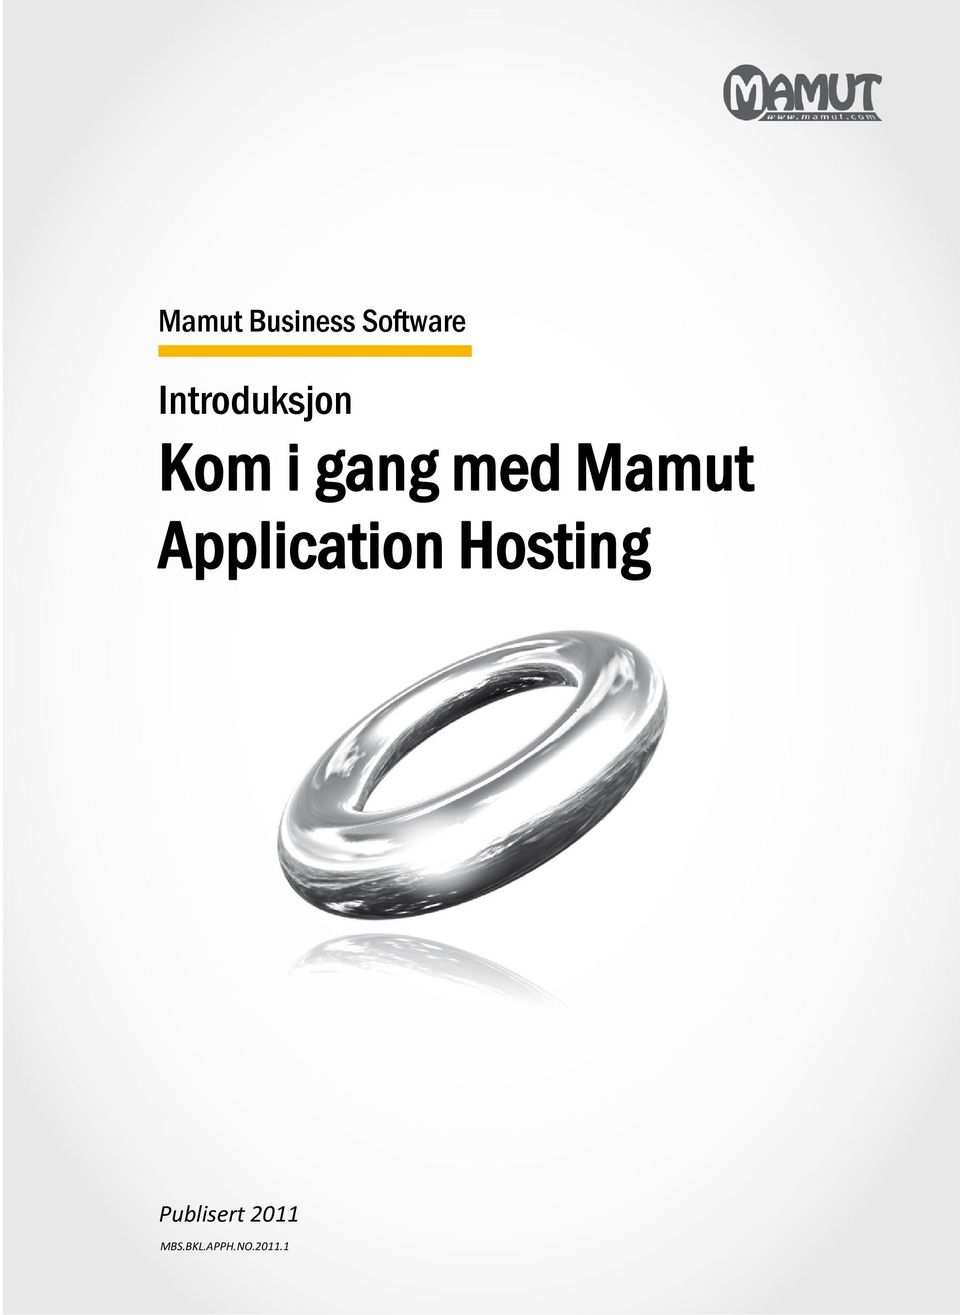 Mamut Application Hosting